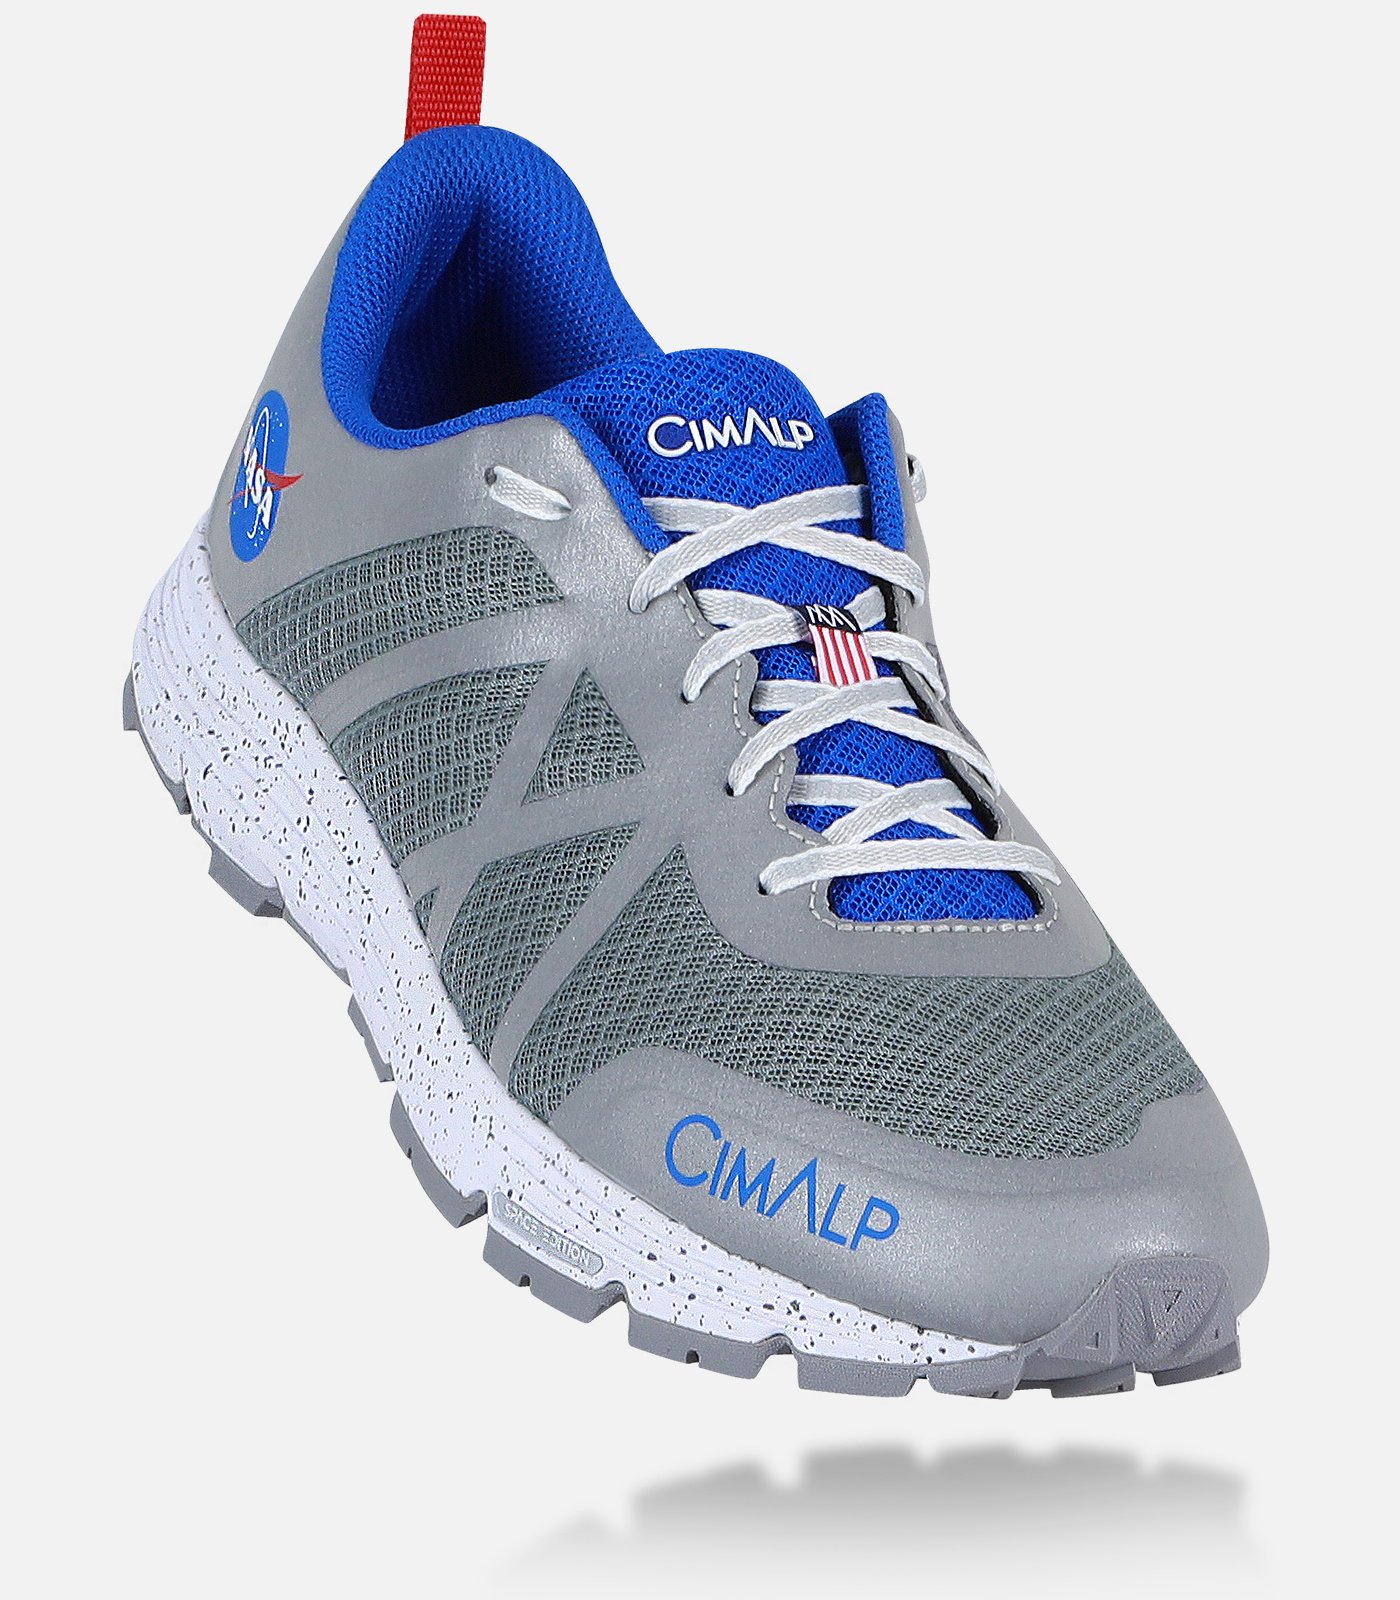 Zapatillas de trail running con suela VIBRAM para Hombre | Cimalp